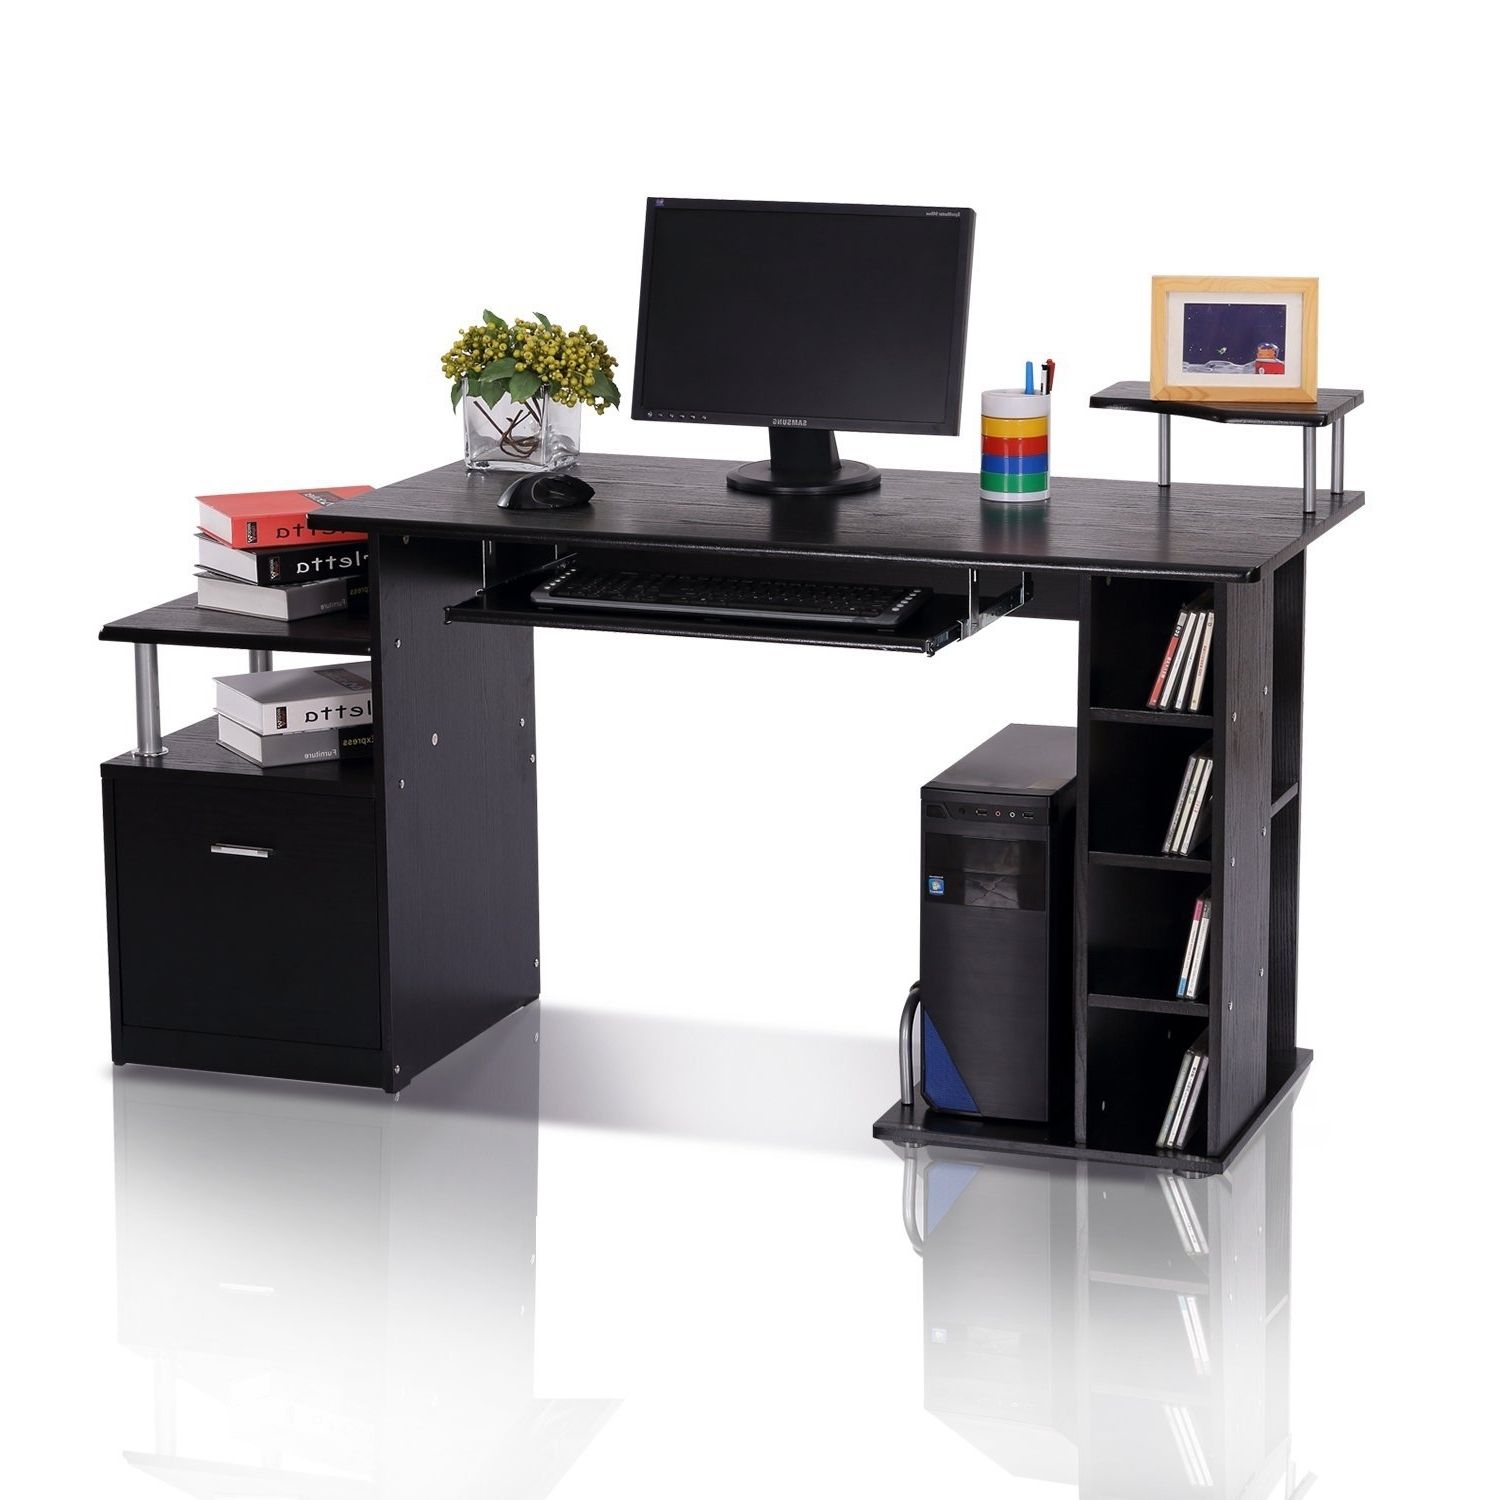 Furniture : Black Computer Desks Home Desk‚ White Desk‚ Black With Recent Computer Desks (View 12 of 20)